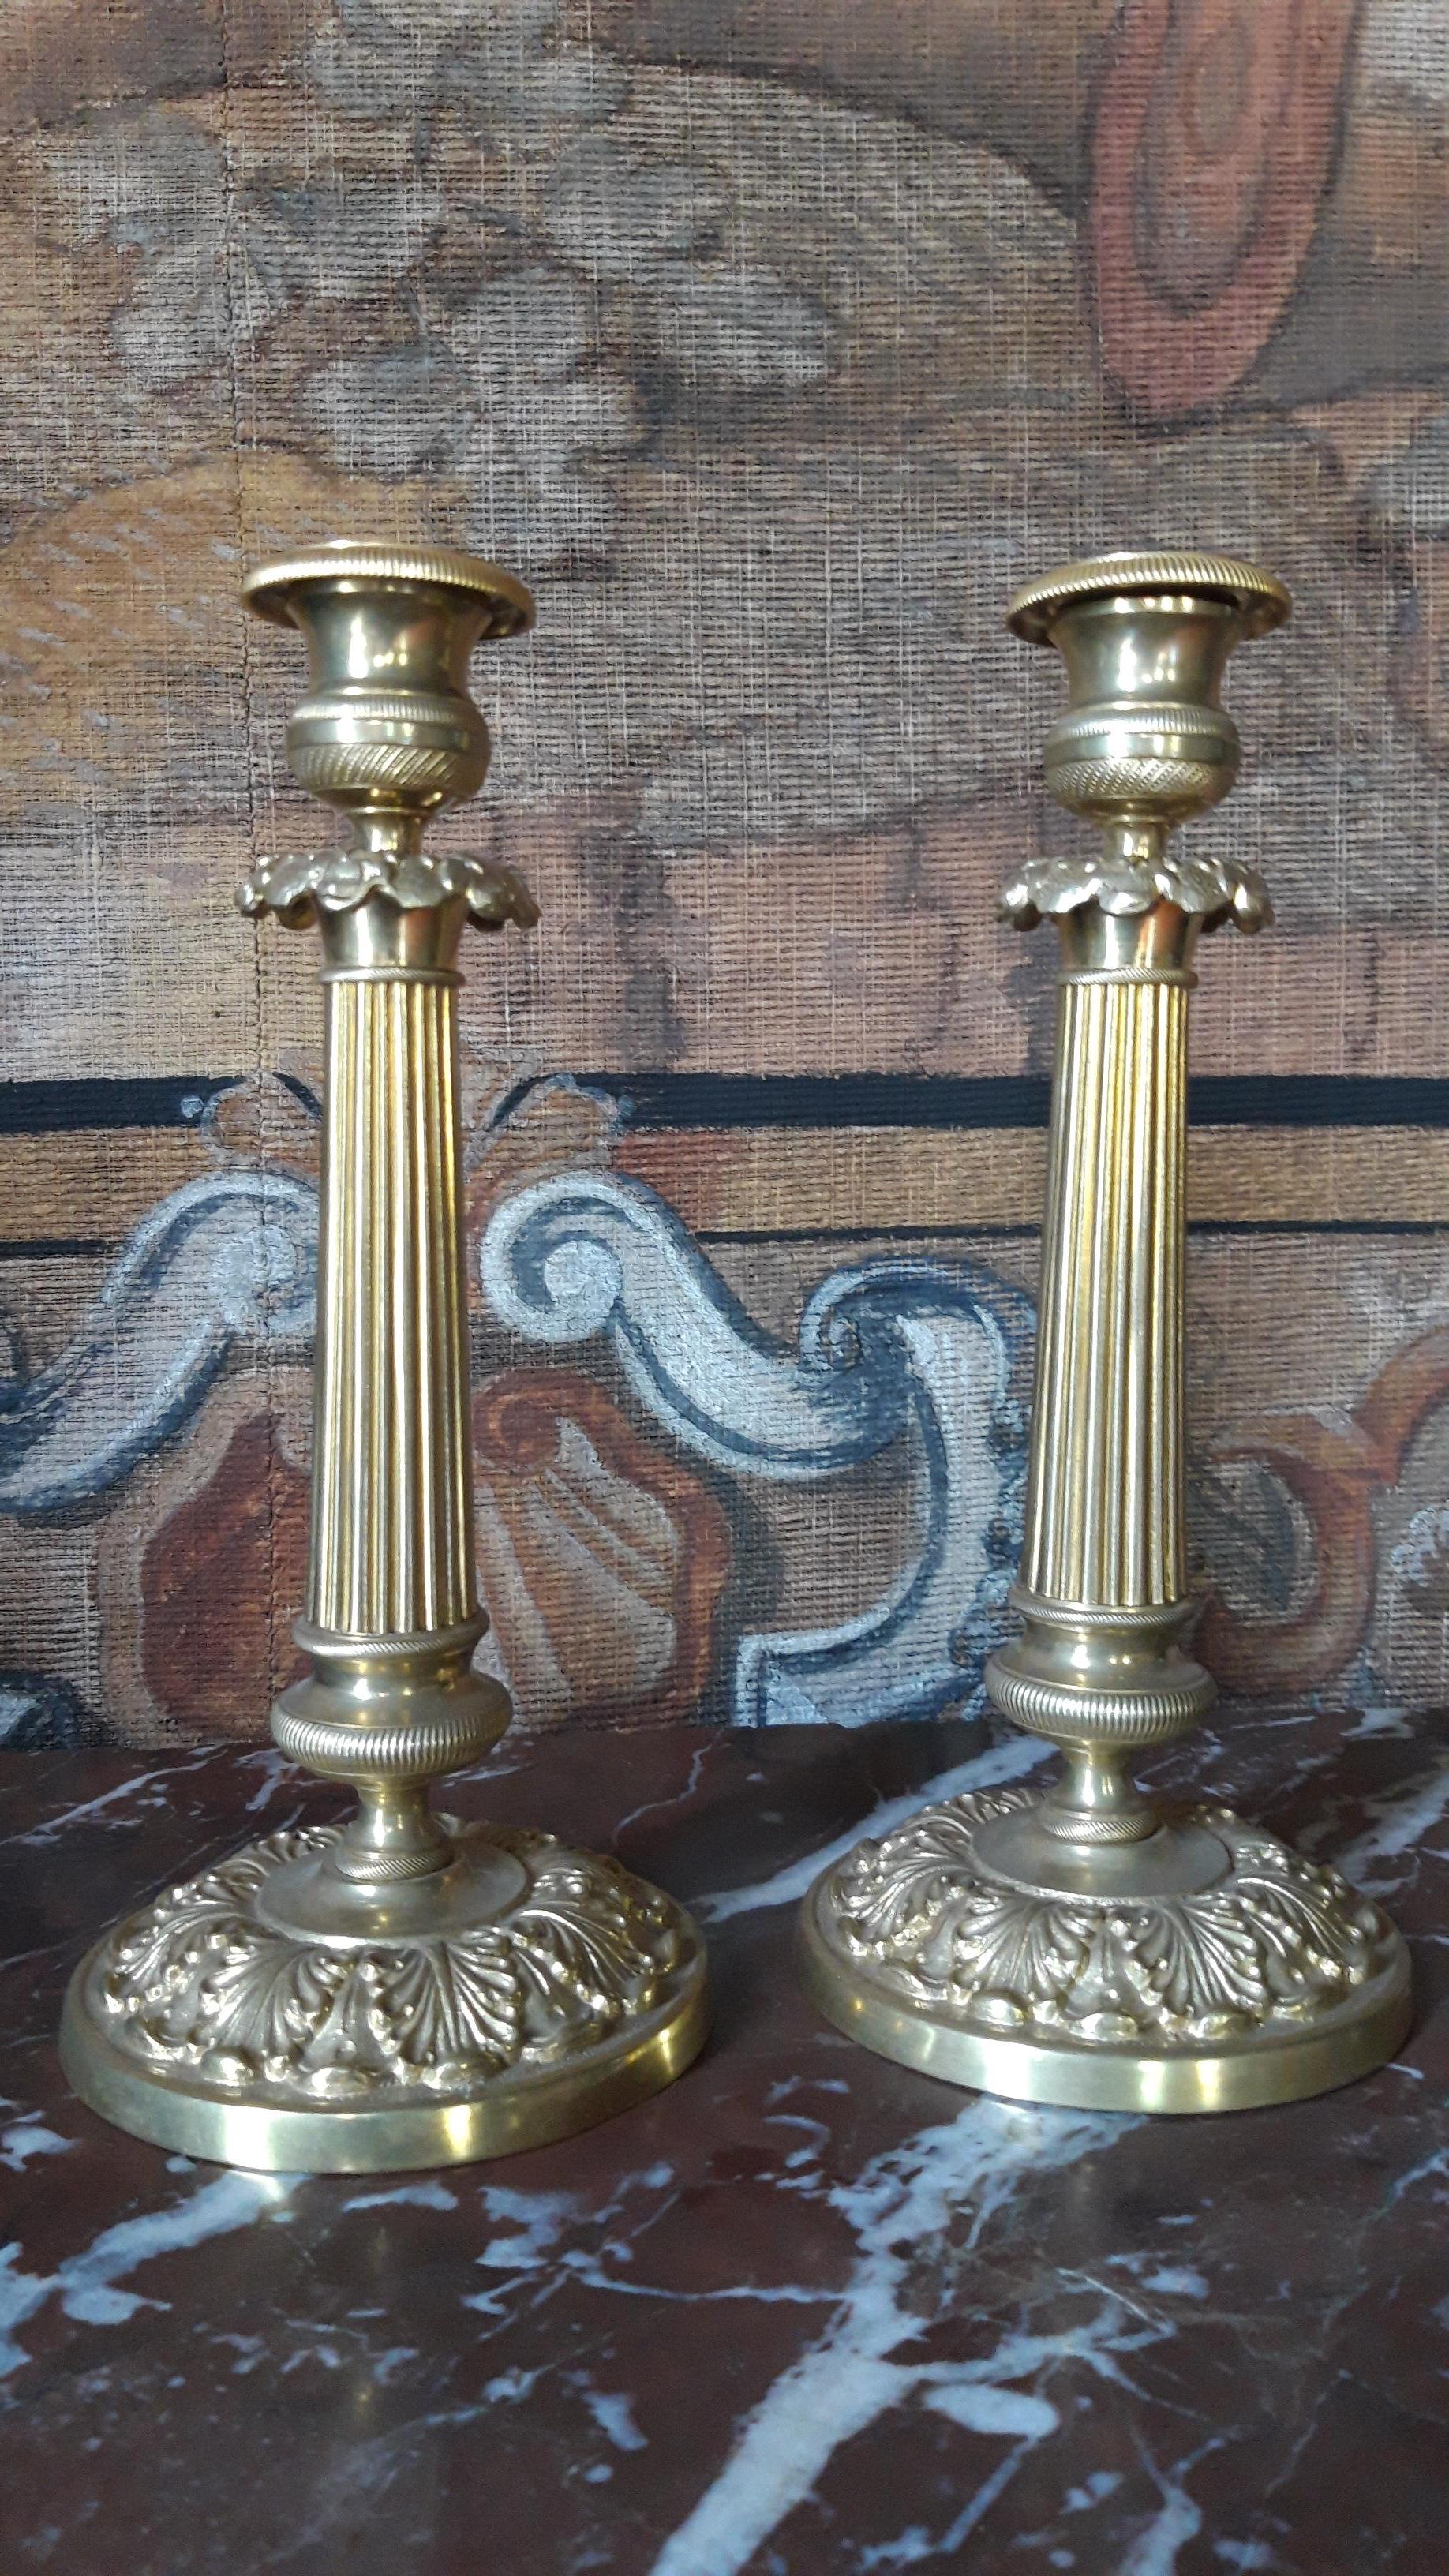 Pair of bronze candlesticks.
France, circa 1900.
Measures: H 25 cm.